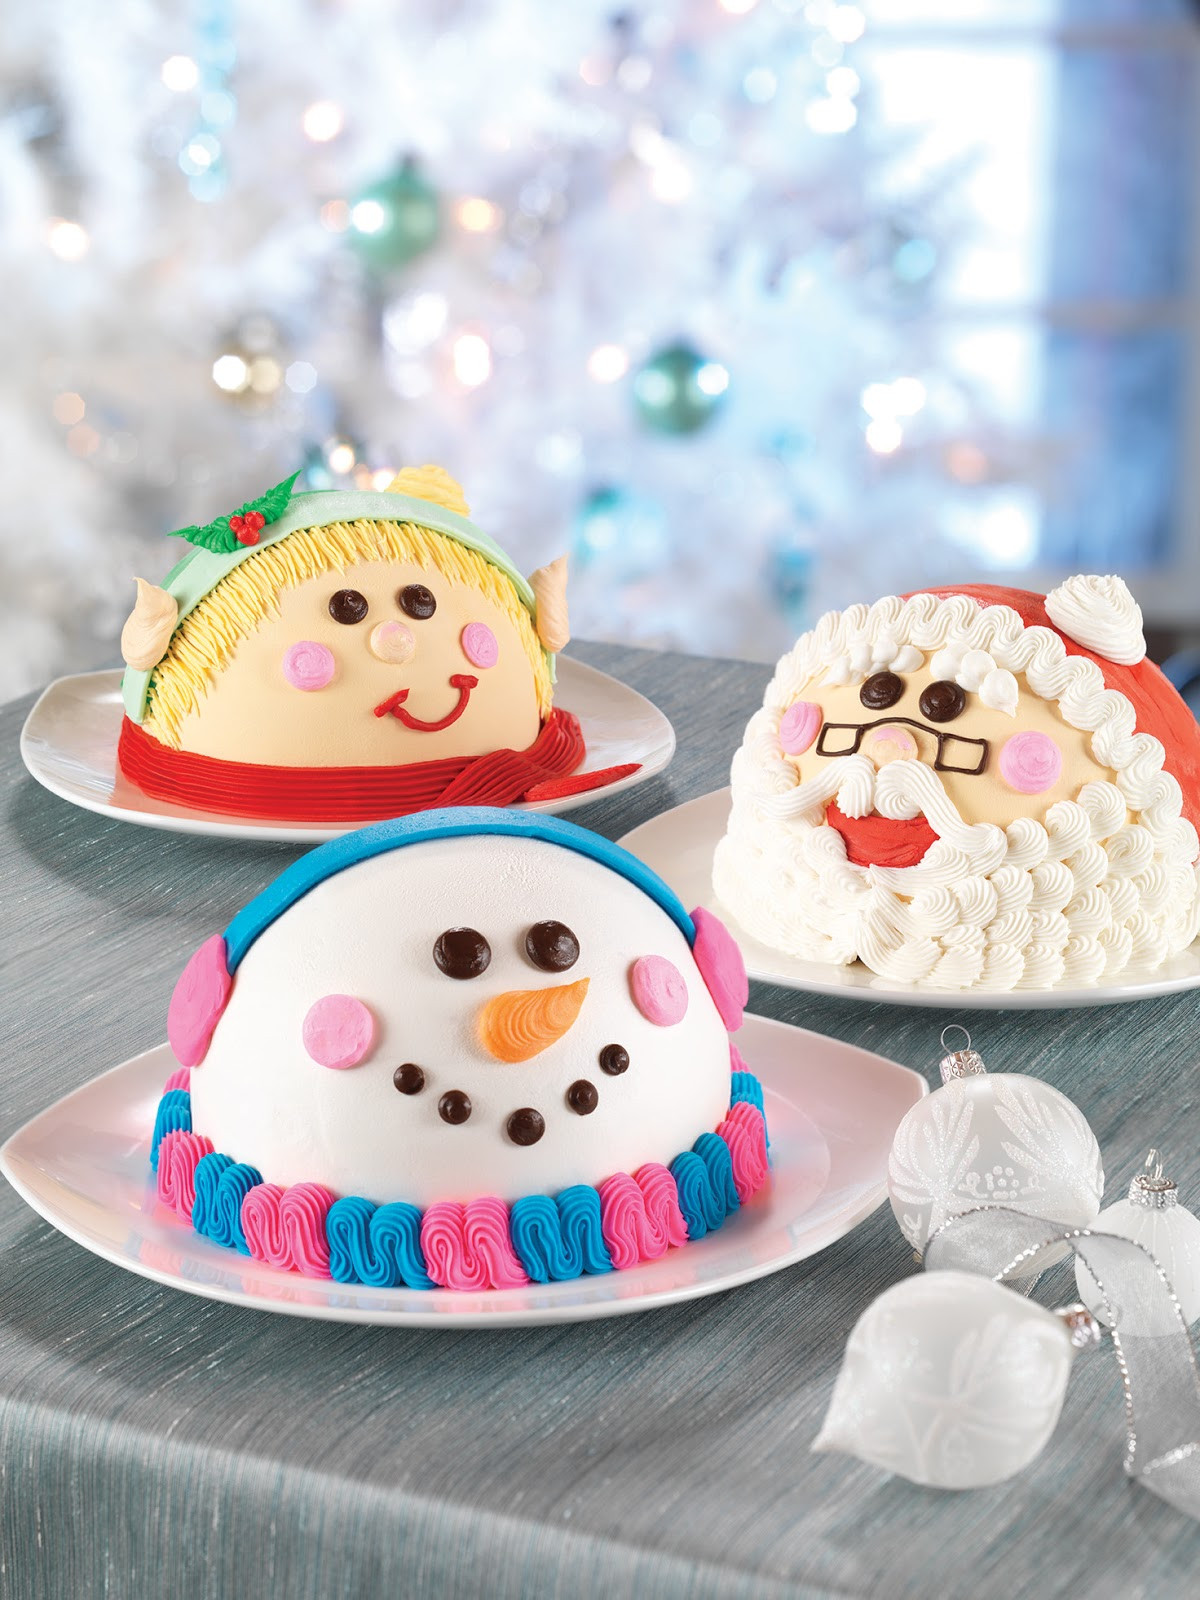 Baskin Robbins Christmas Cakes
 Review Baskin Robbins’ Festive New Ice Cream Cakes